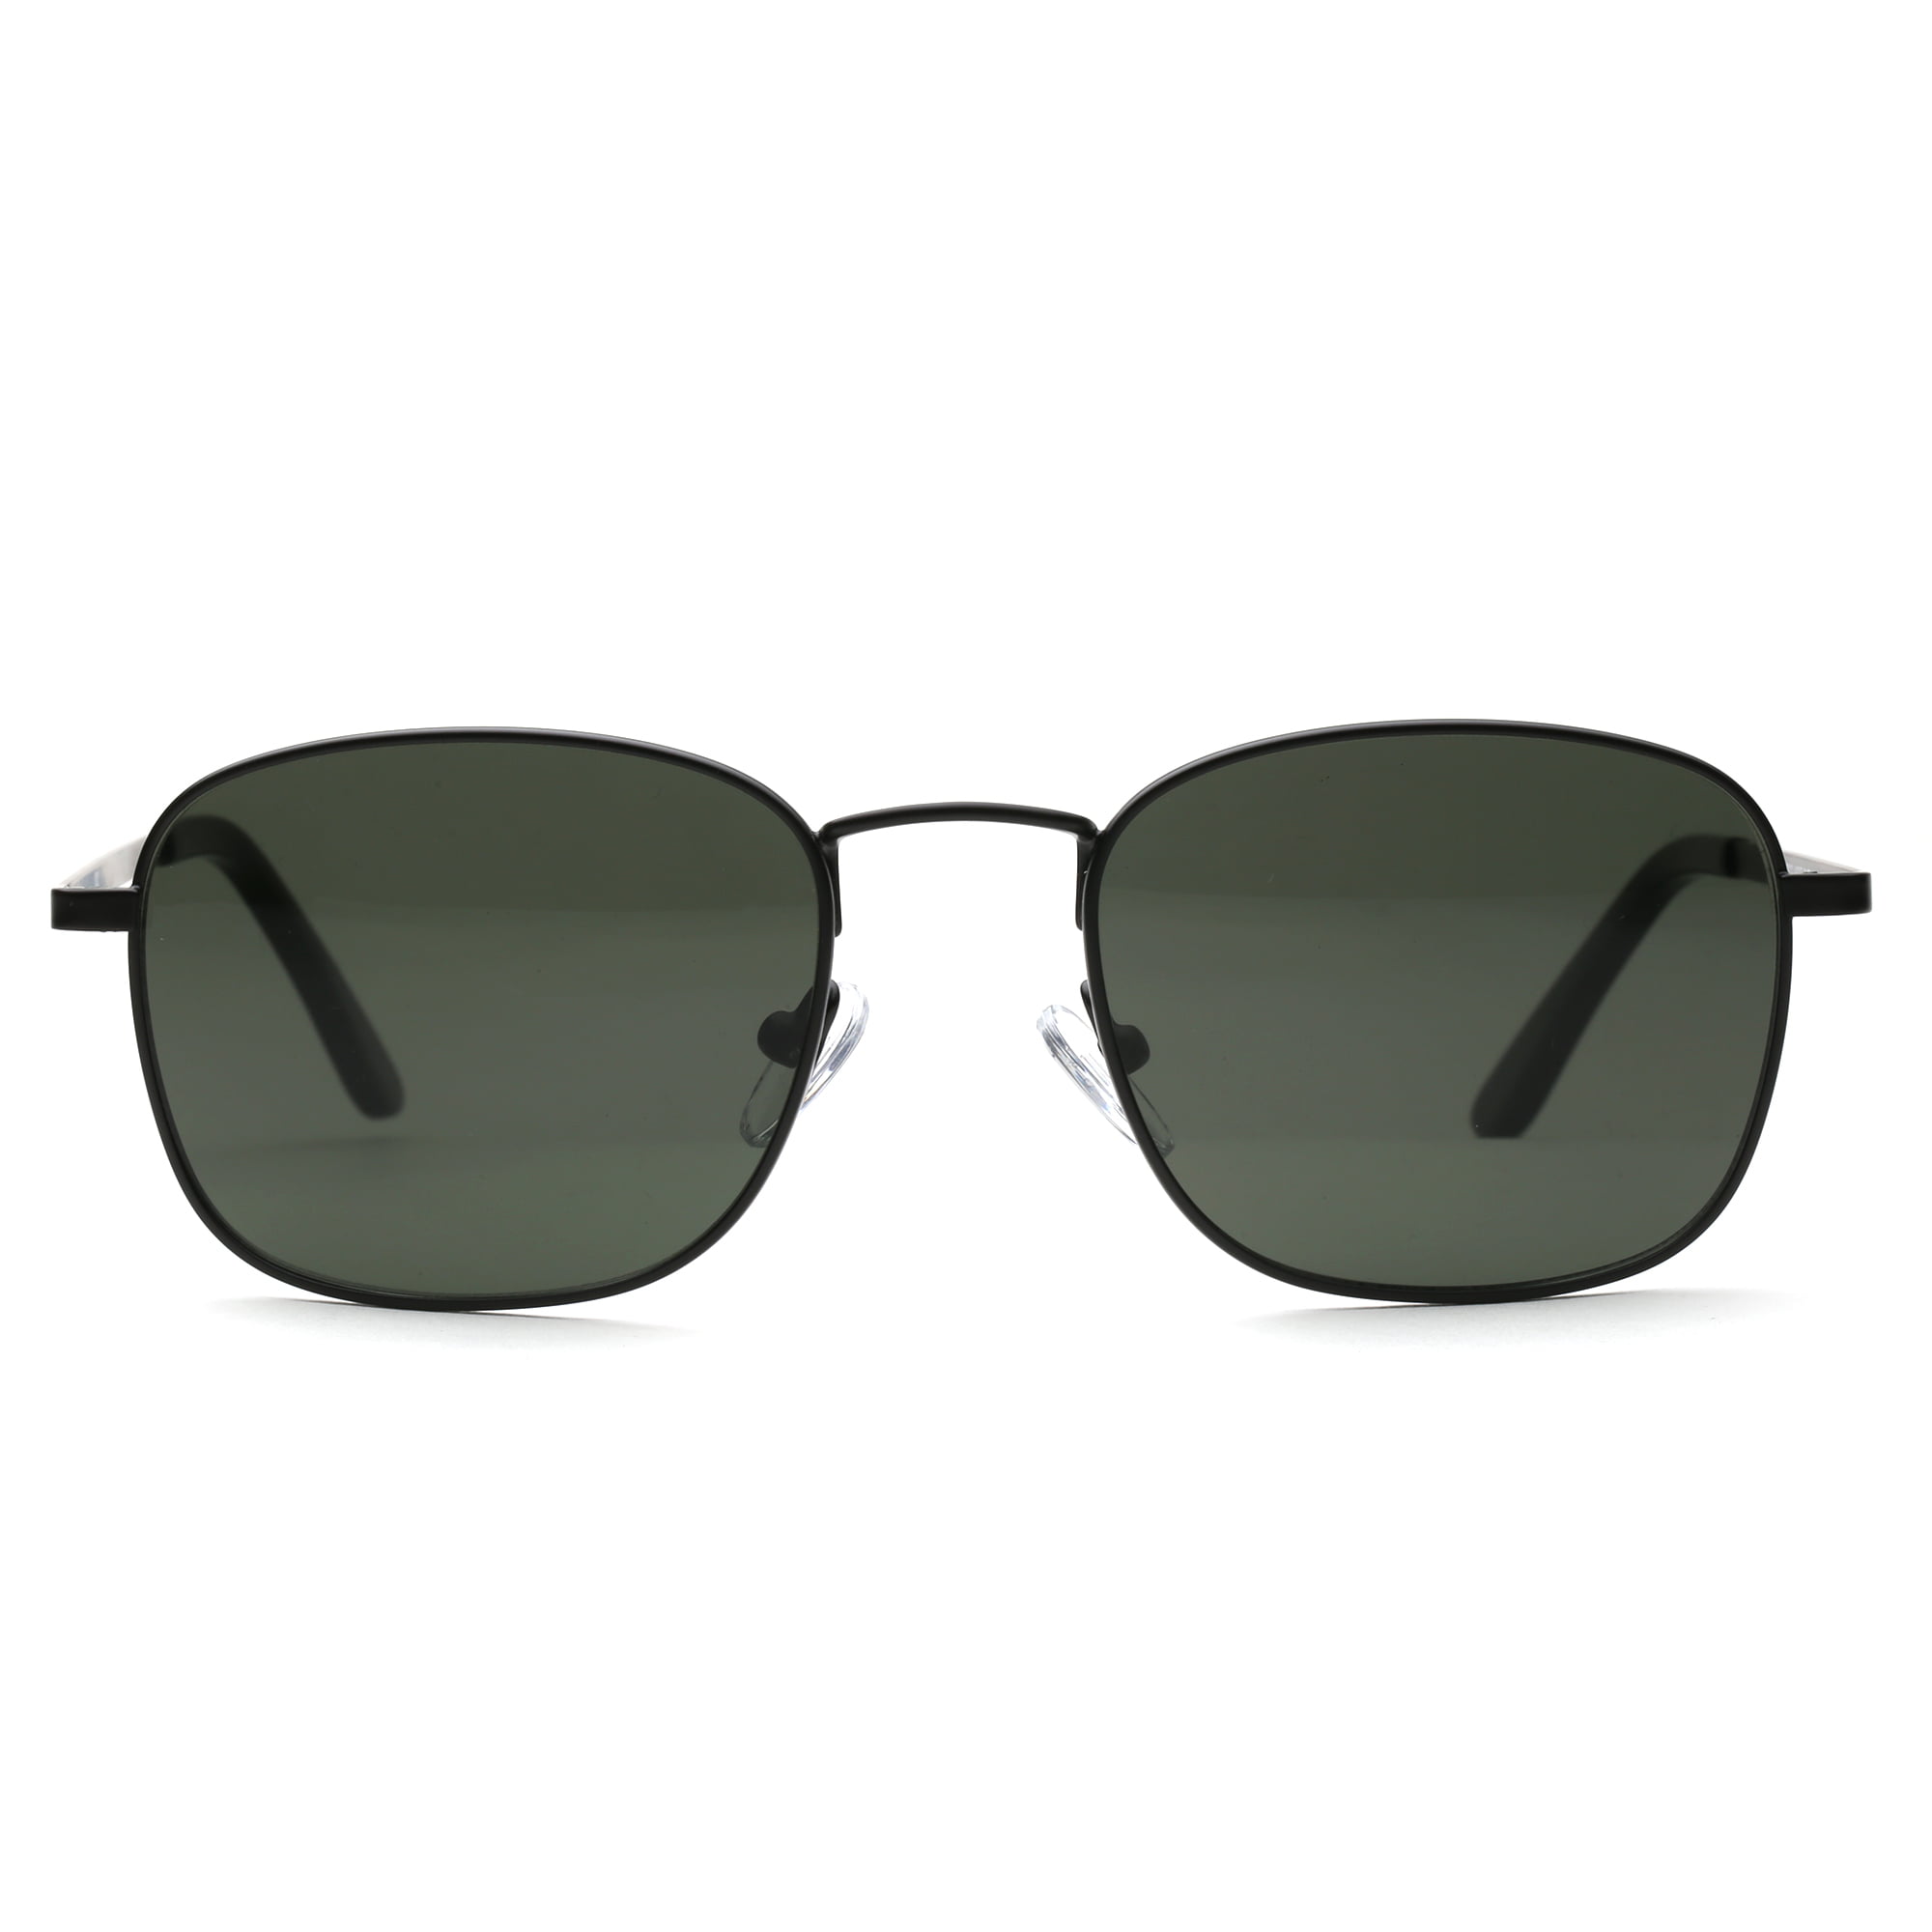 Men's Small Black Metal Square Sunglasses, UV Protection 51-19-140